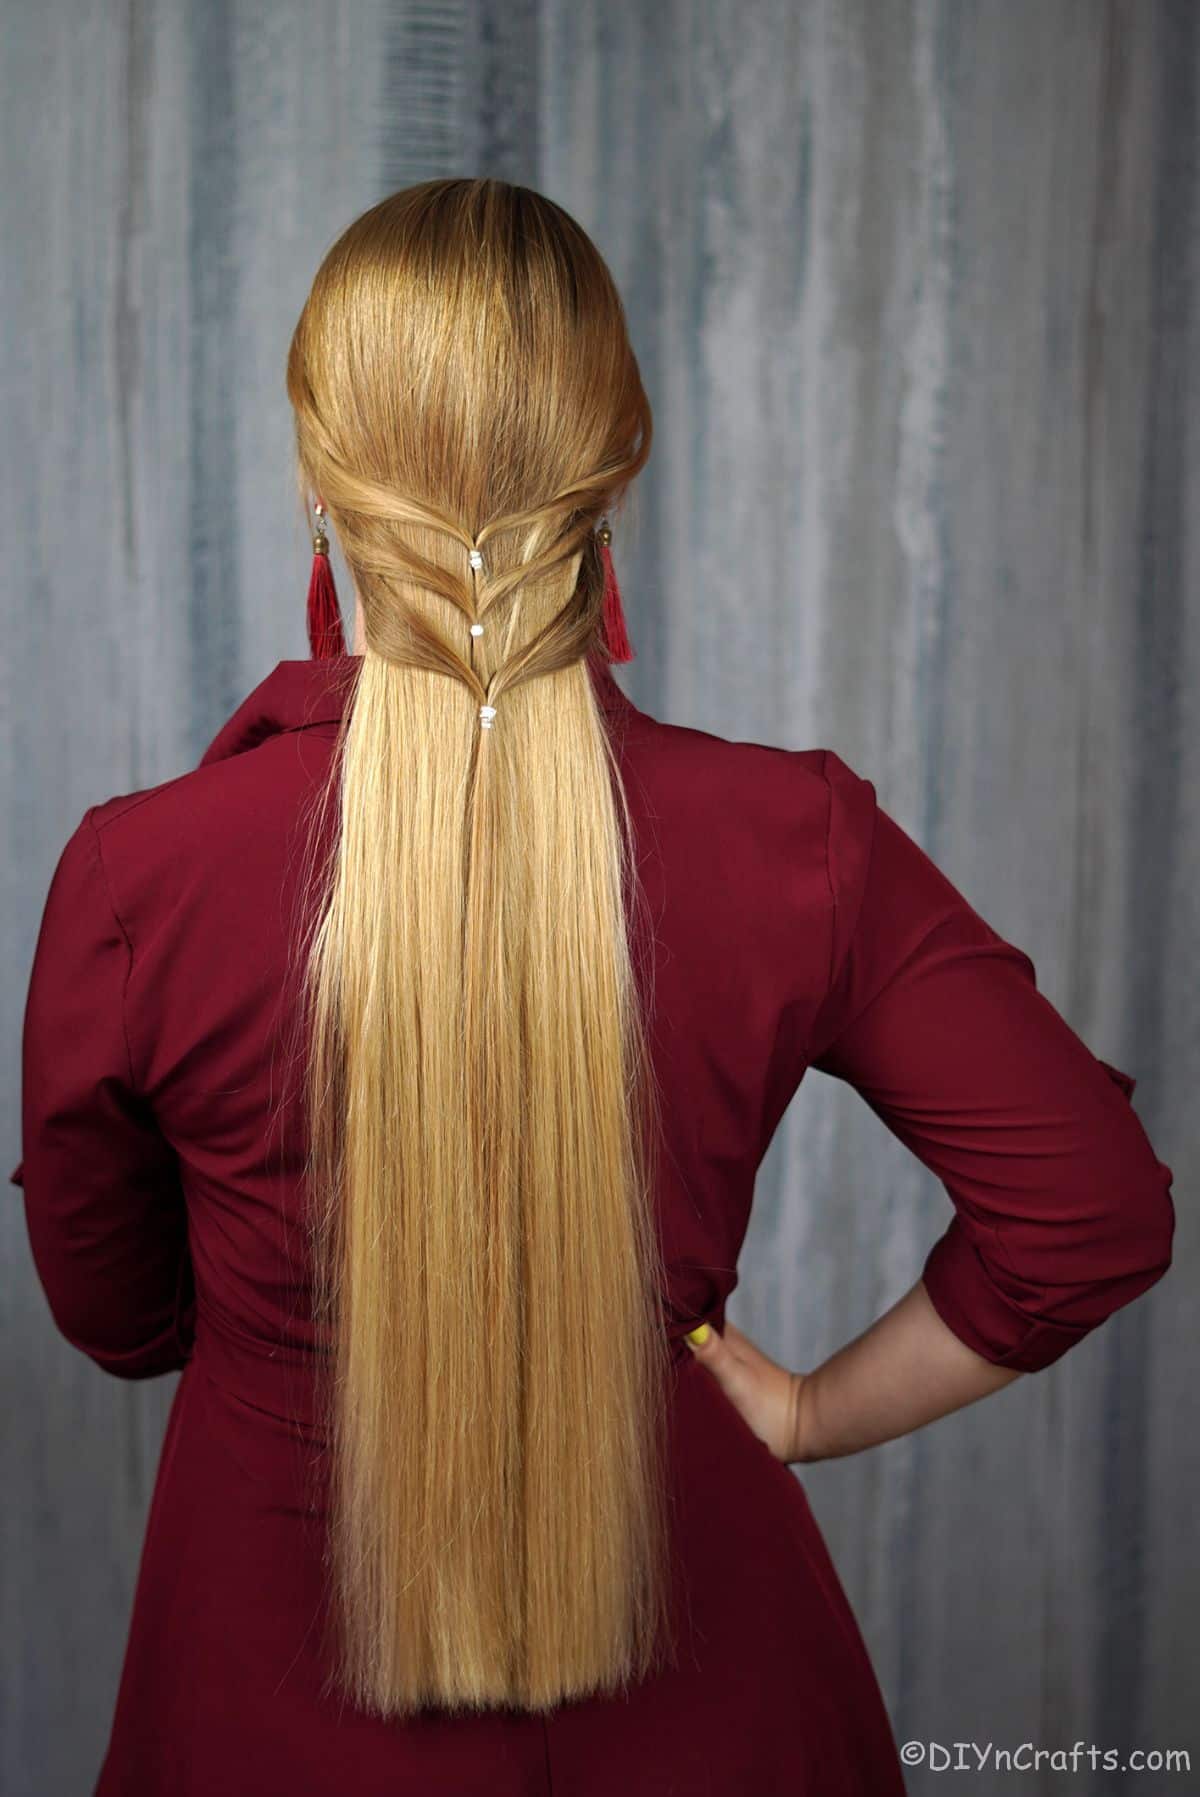 three layered low ponytail on blonde woman